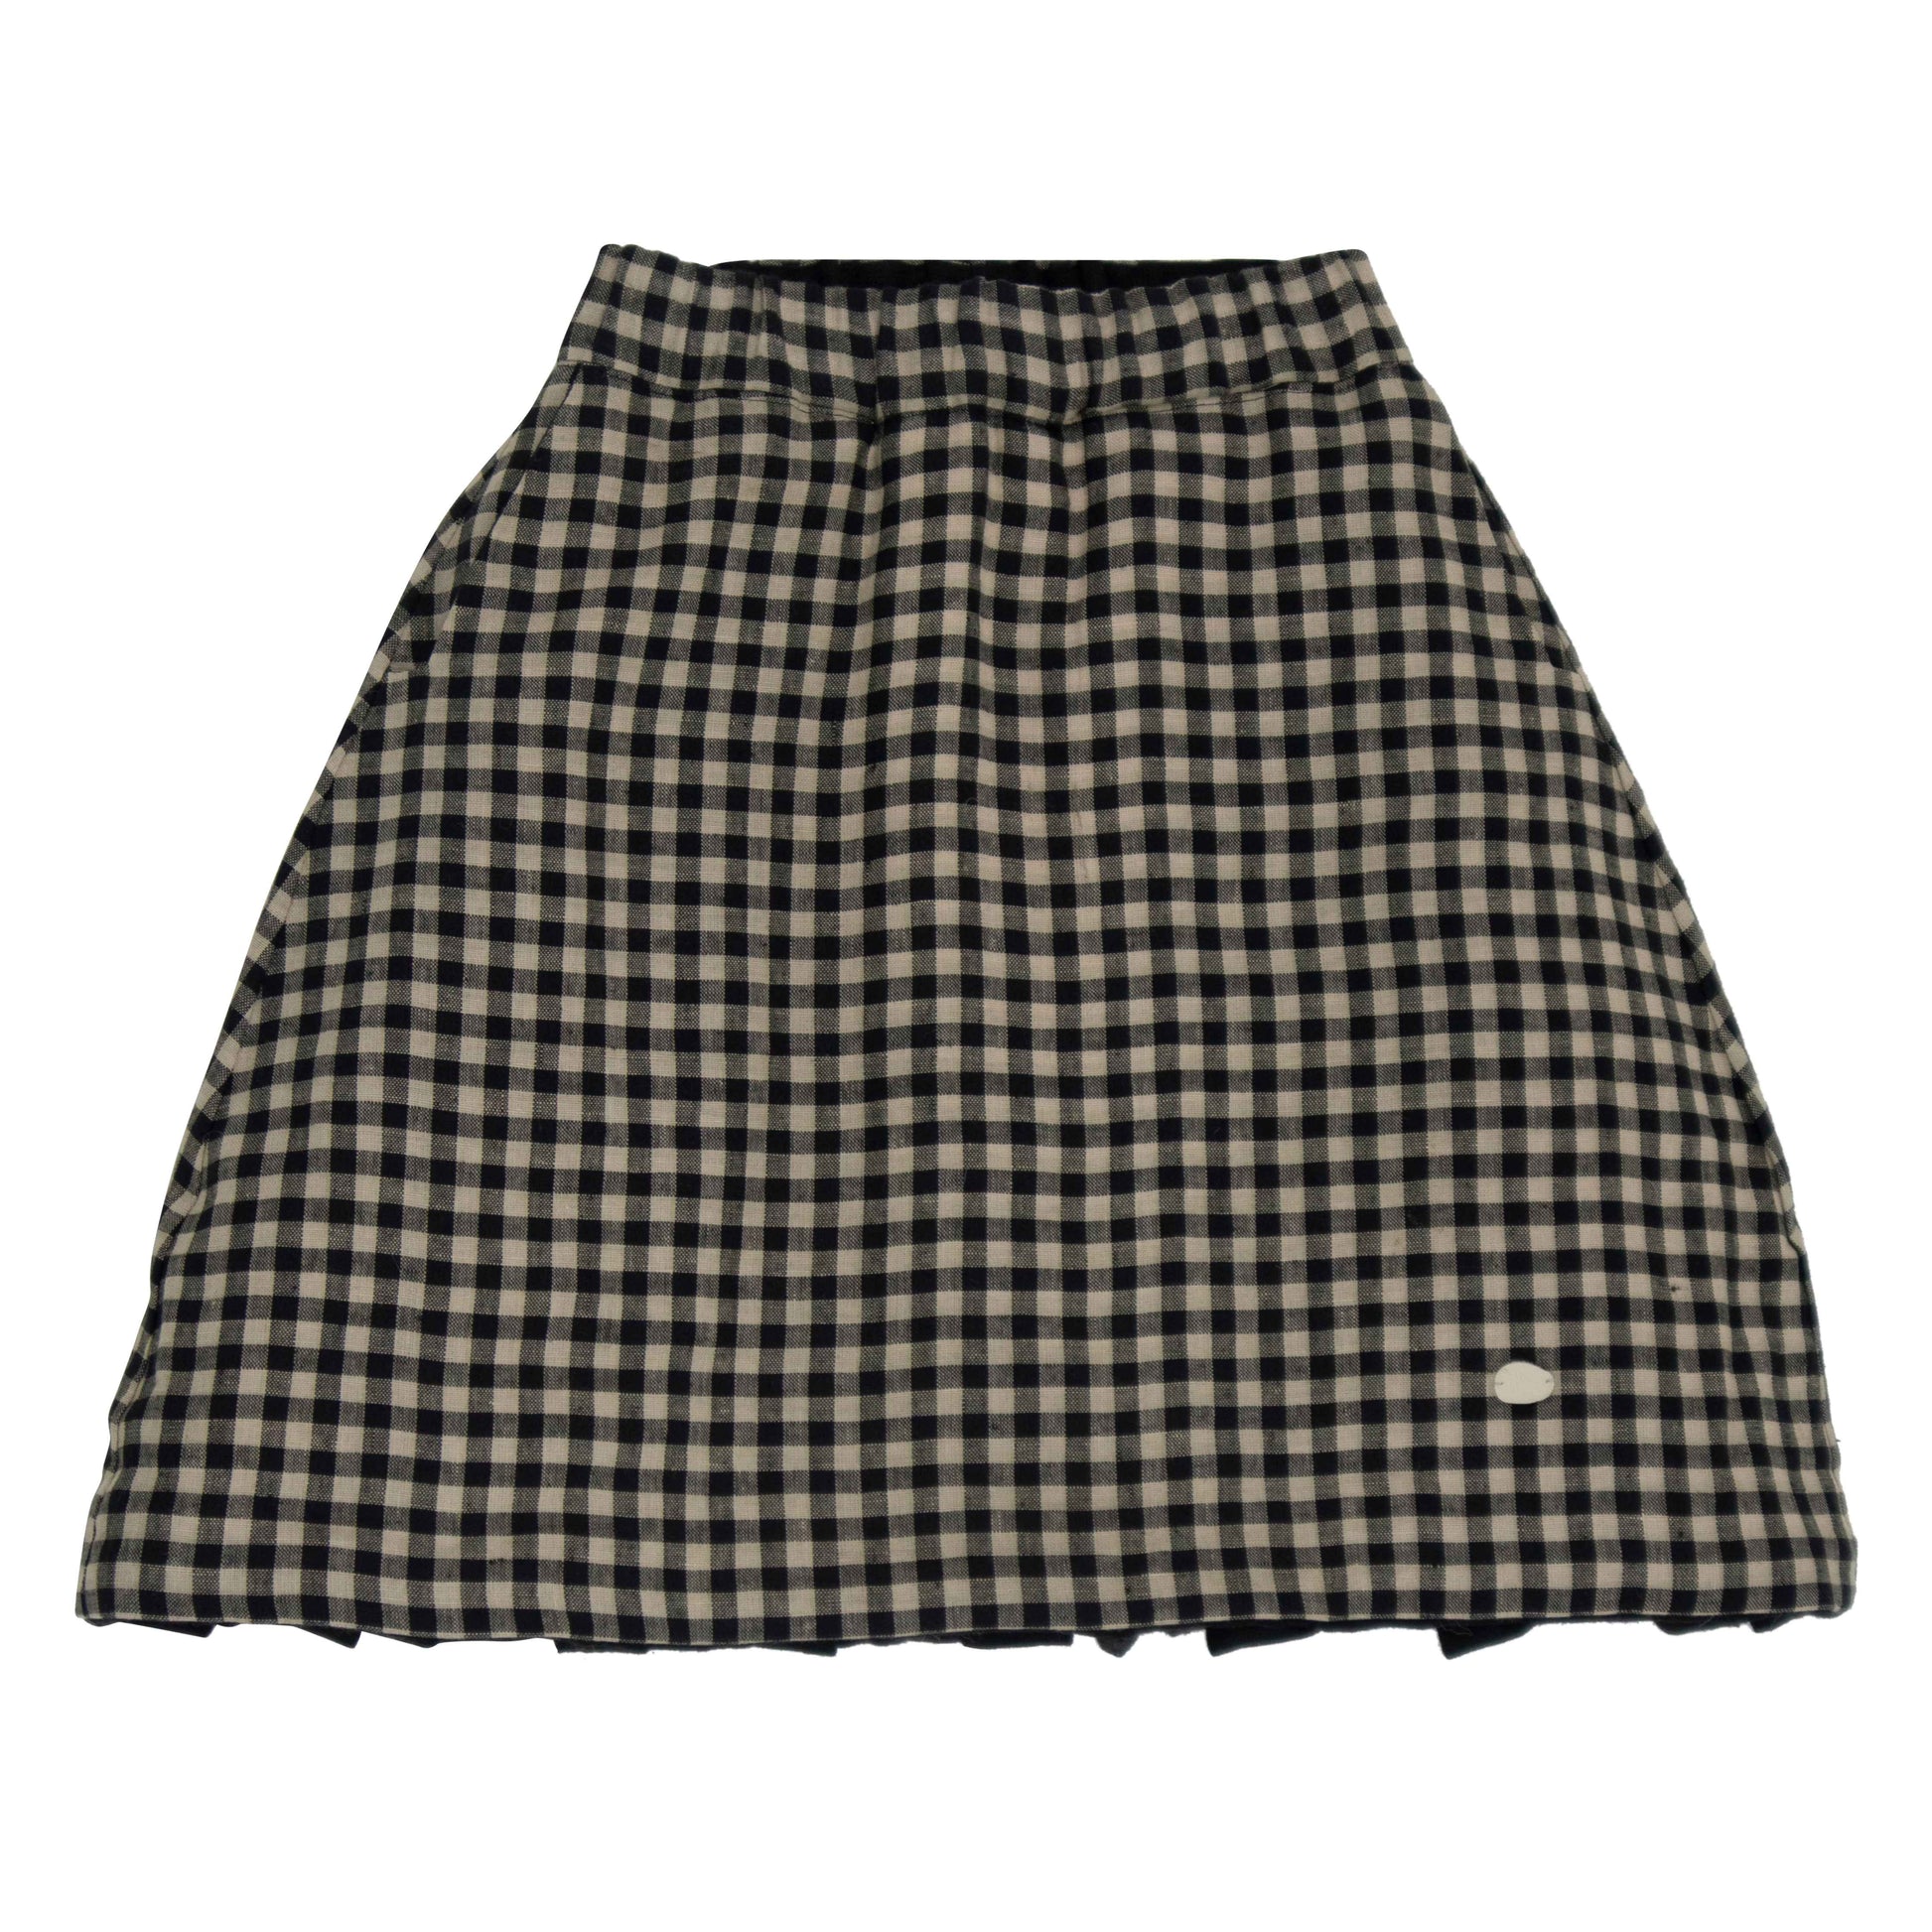 UPA Freya linen skirt checkered black and natural